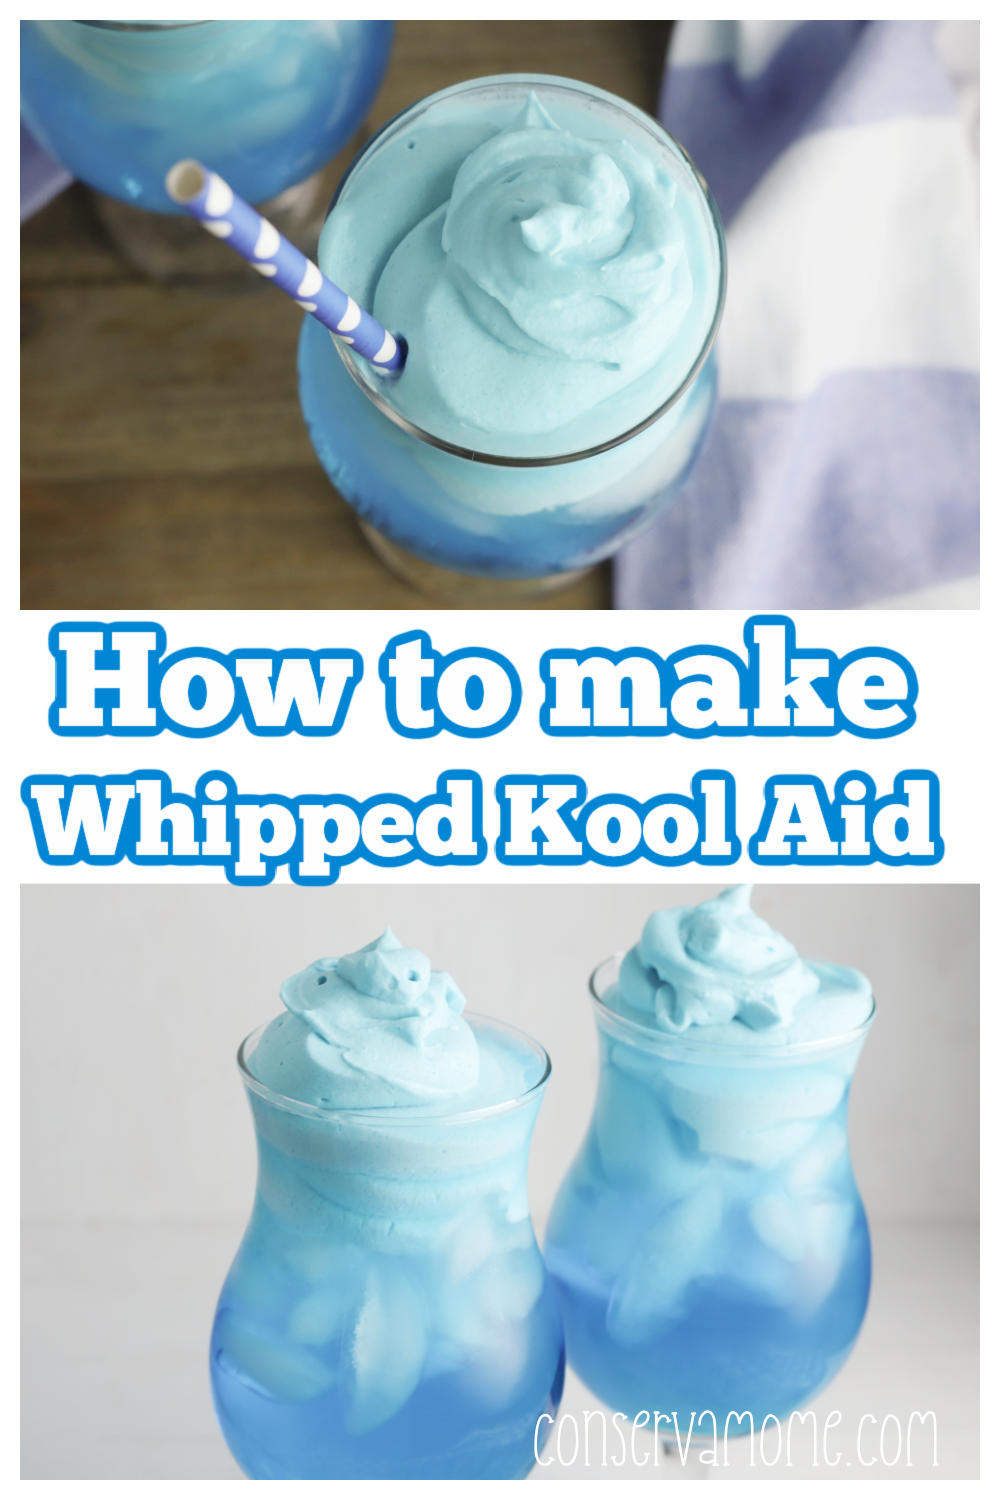 Whipped Kool Aid : A refreshing & Unique Kool Aid drink